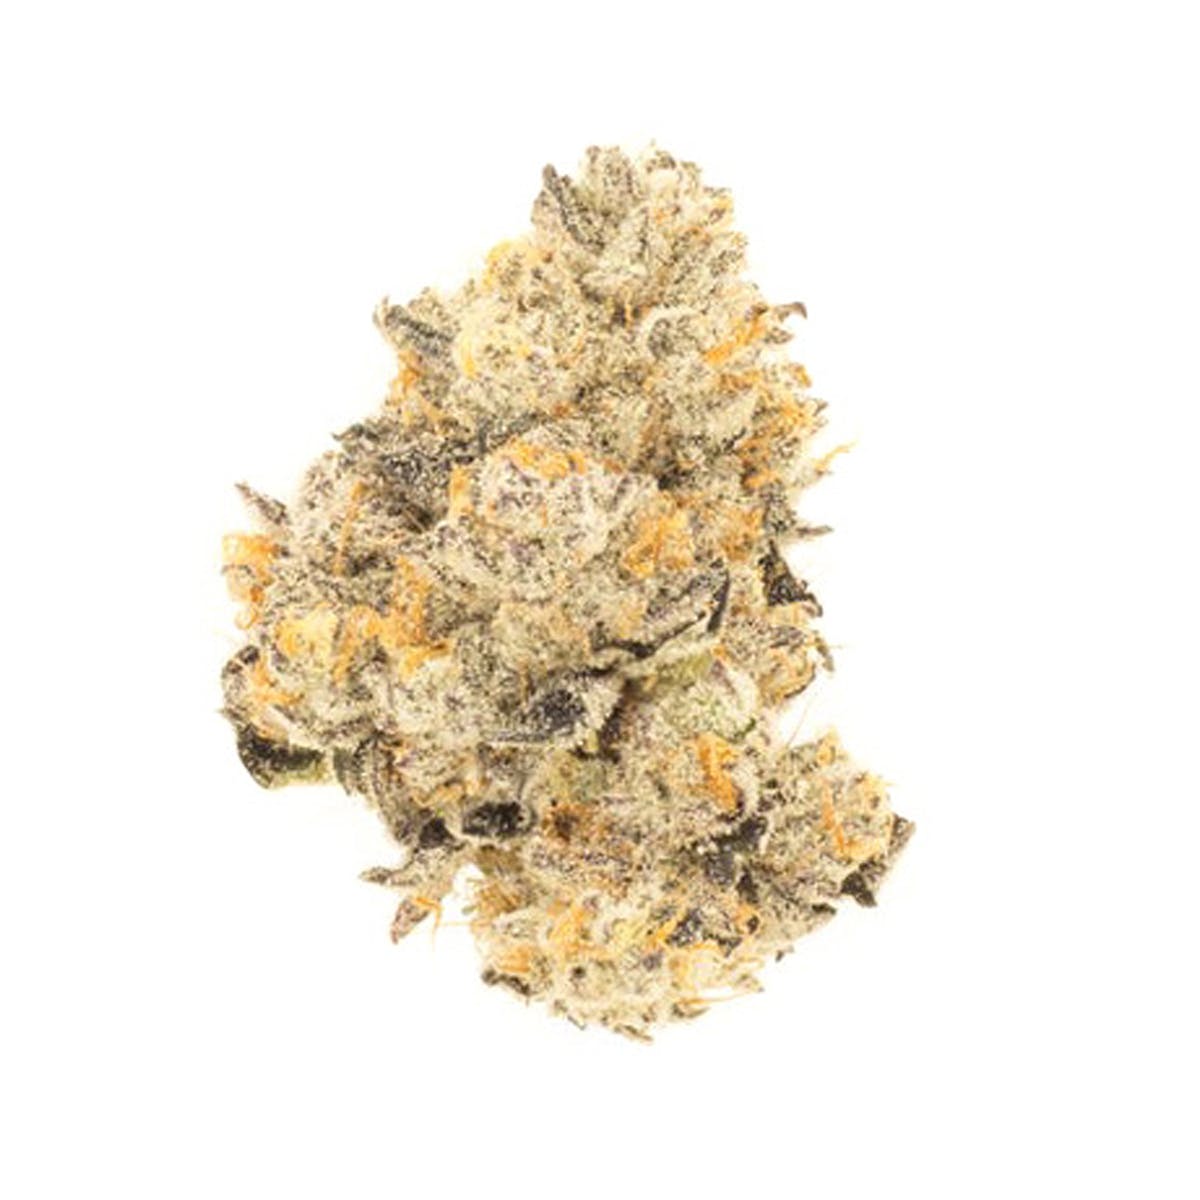 marijuana-dispensaries-culta-in-baltimore-dosidos-2322-by-culta